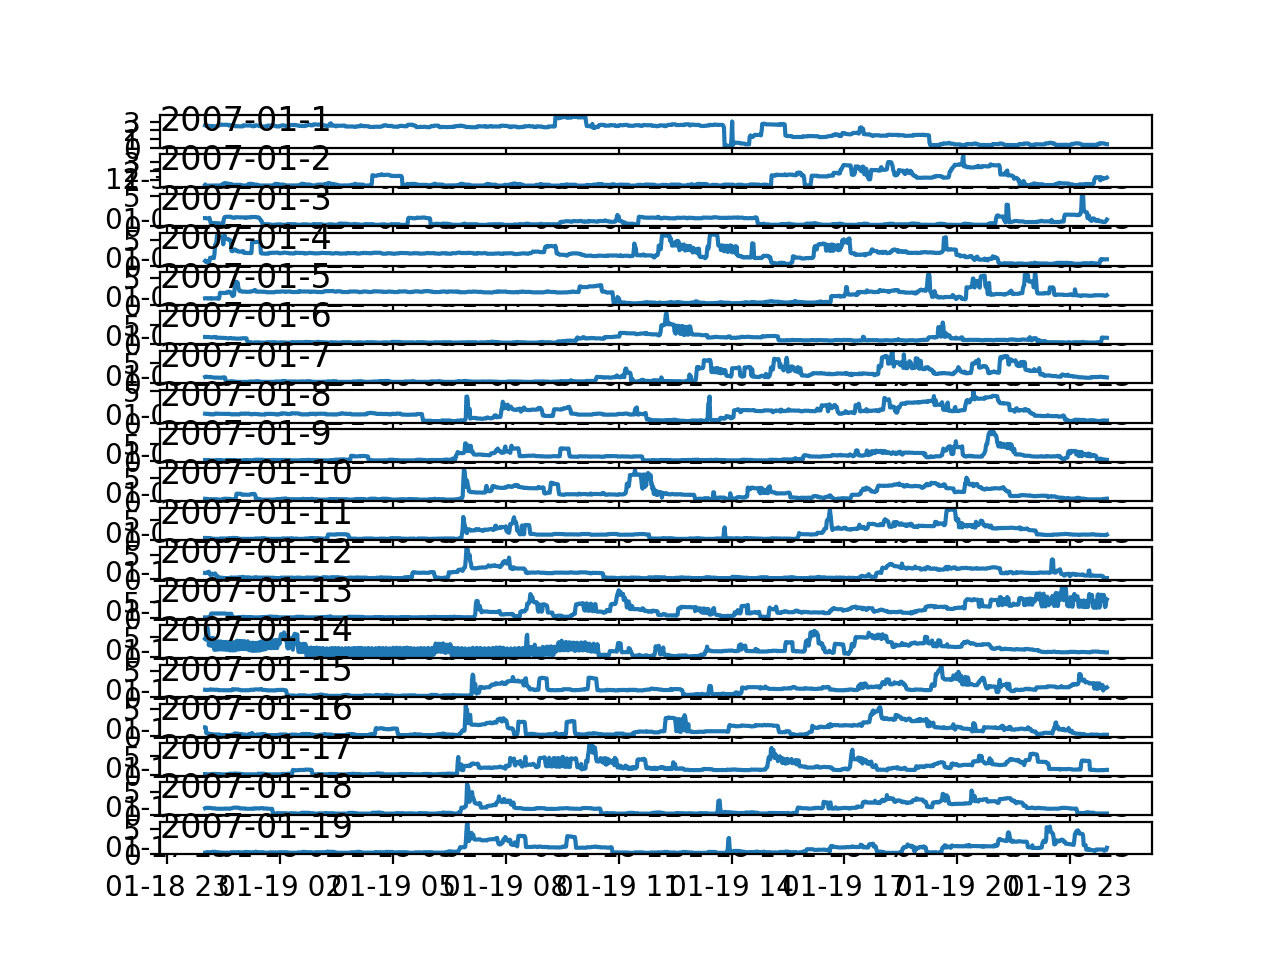 Gráficos de líneas para potencia activa durante 20 días en un mes